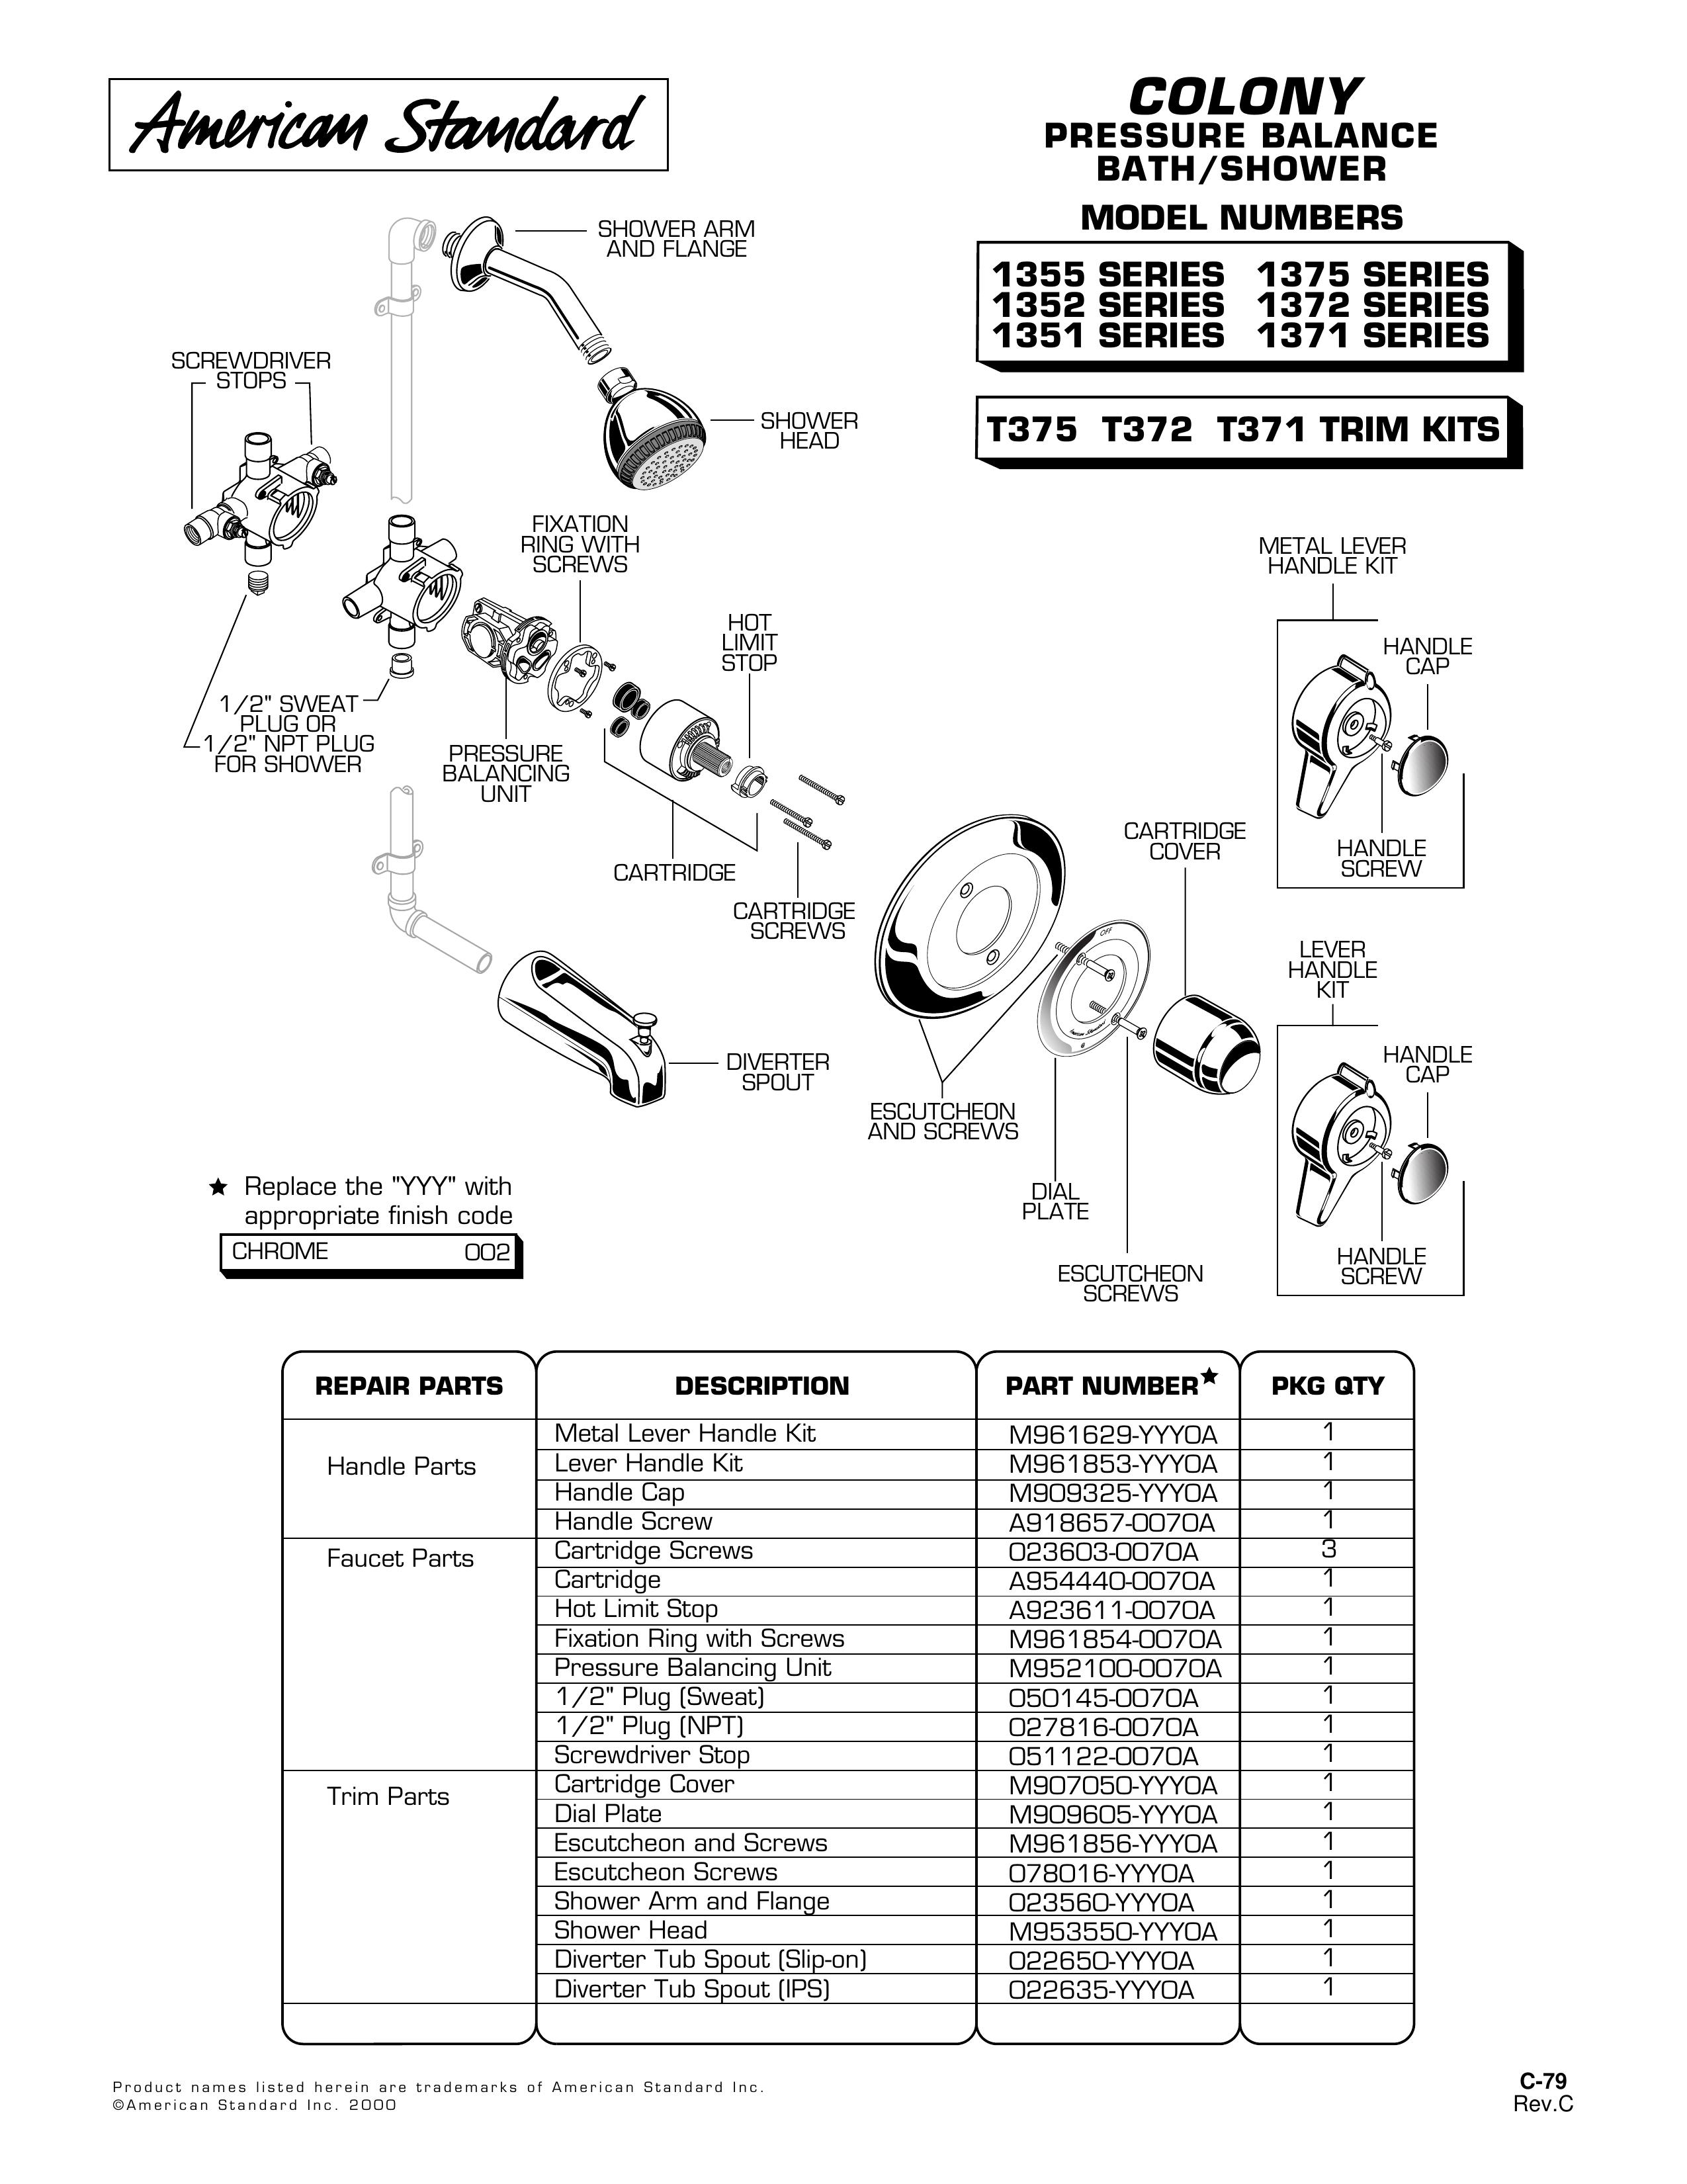 American Standard 1351 SERIES Outdoor Shower User Manual